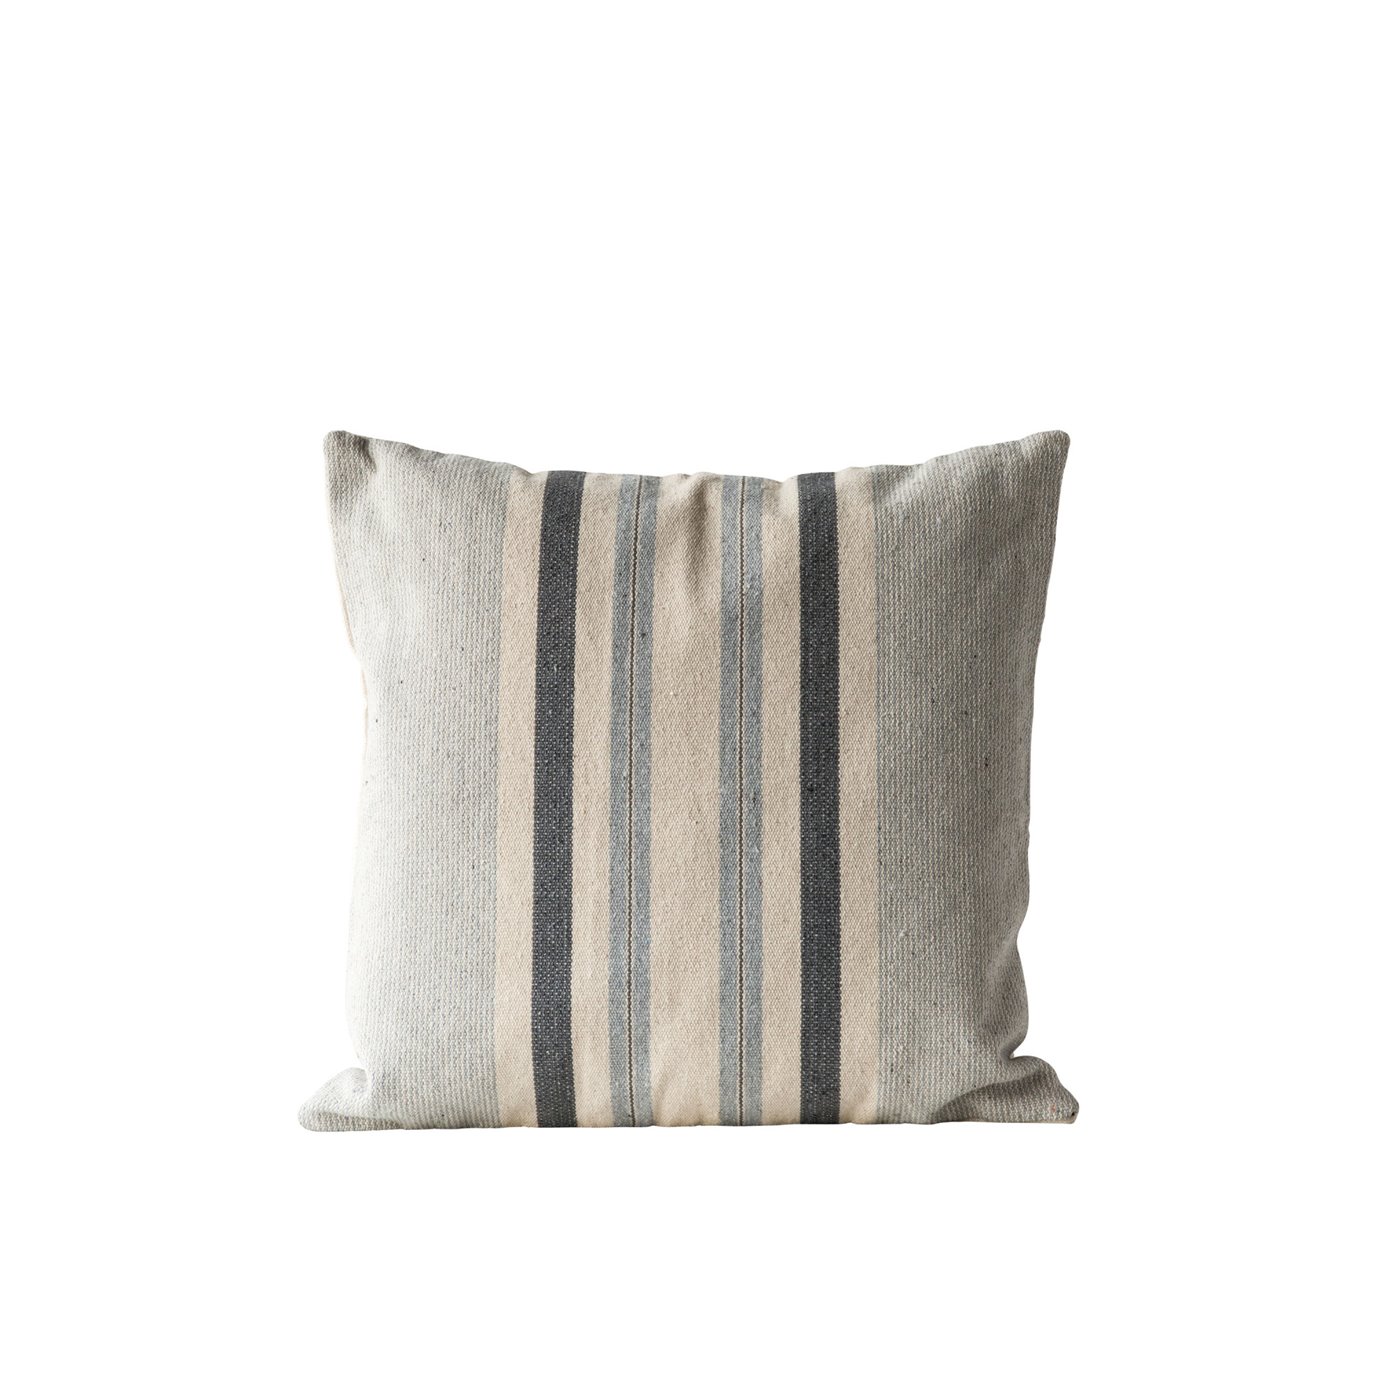 Square Grey Striped Cotton Woven Pillow